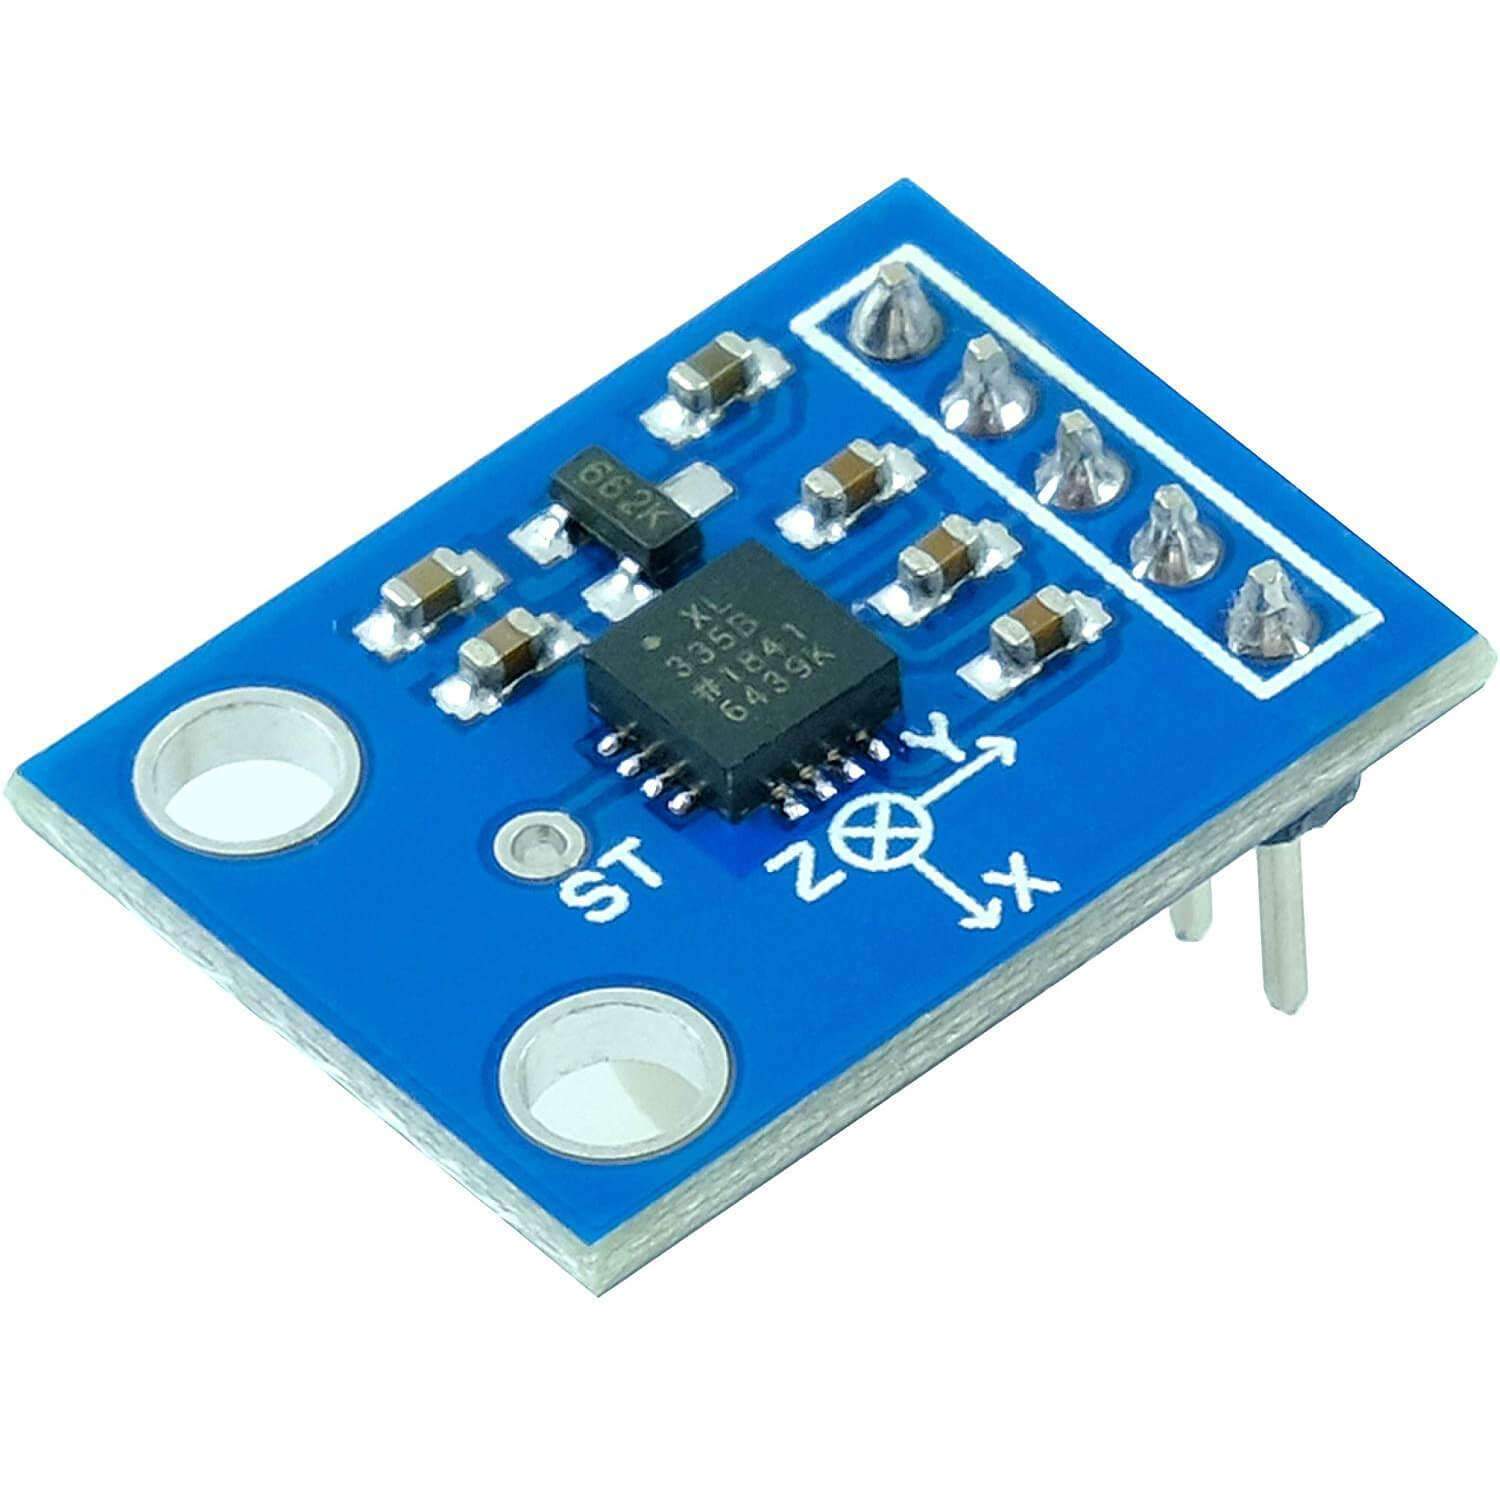 MakerHawk 6 x Akku-Ladeplatine integriertes Modul 25 x 16 x 4 mm DIY PCB  Board 1,4A 1,5A 5V mit Schutz